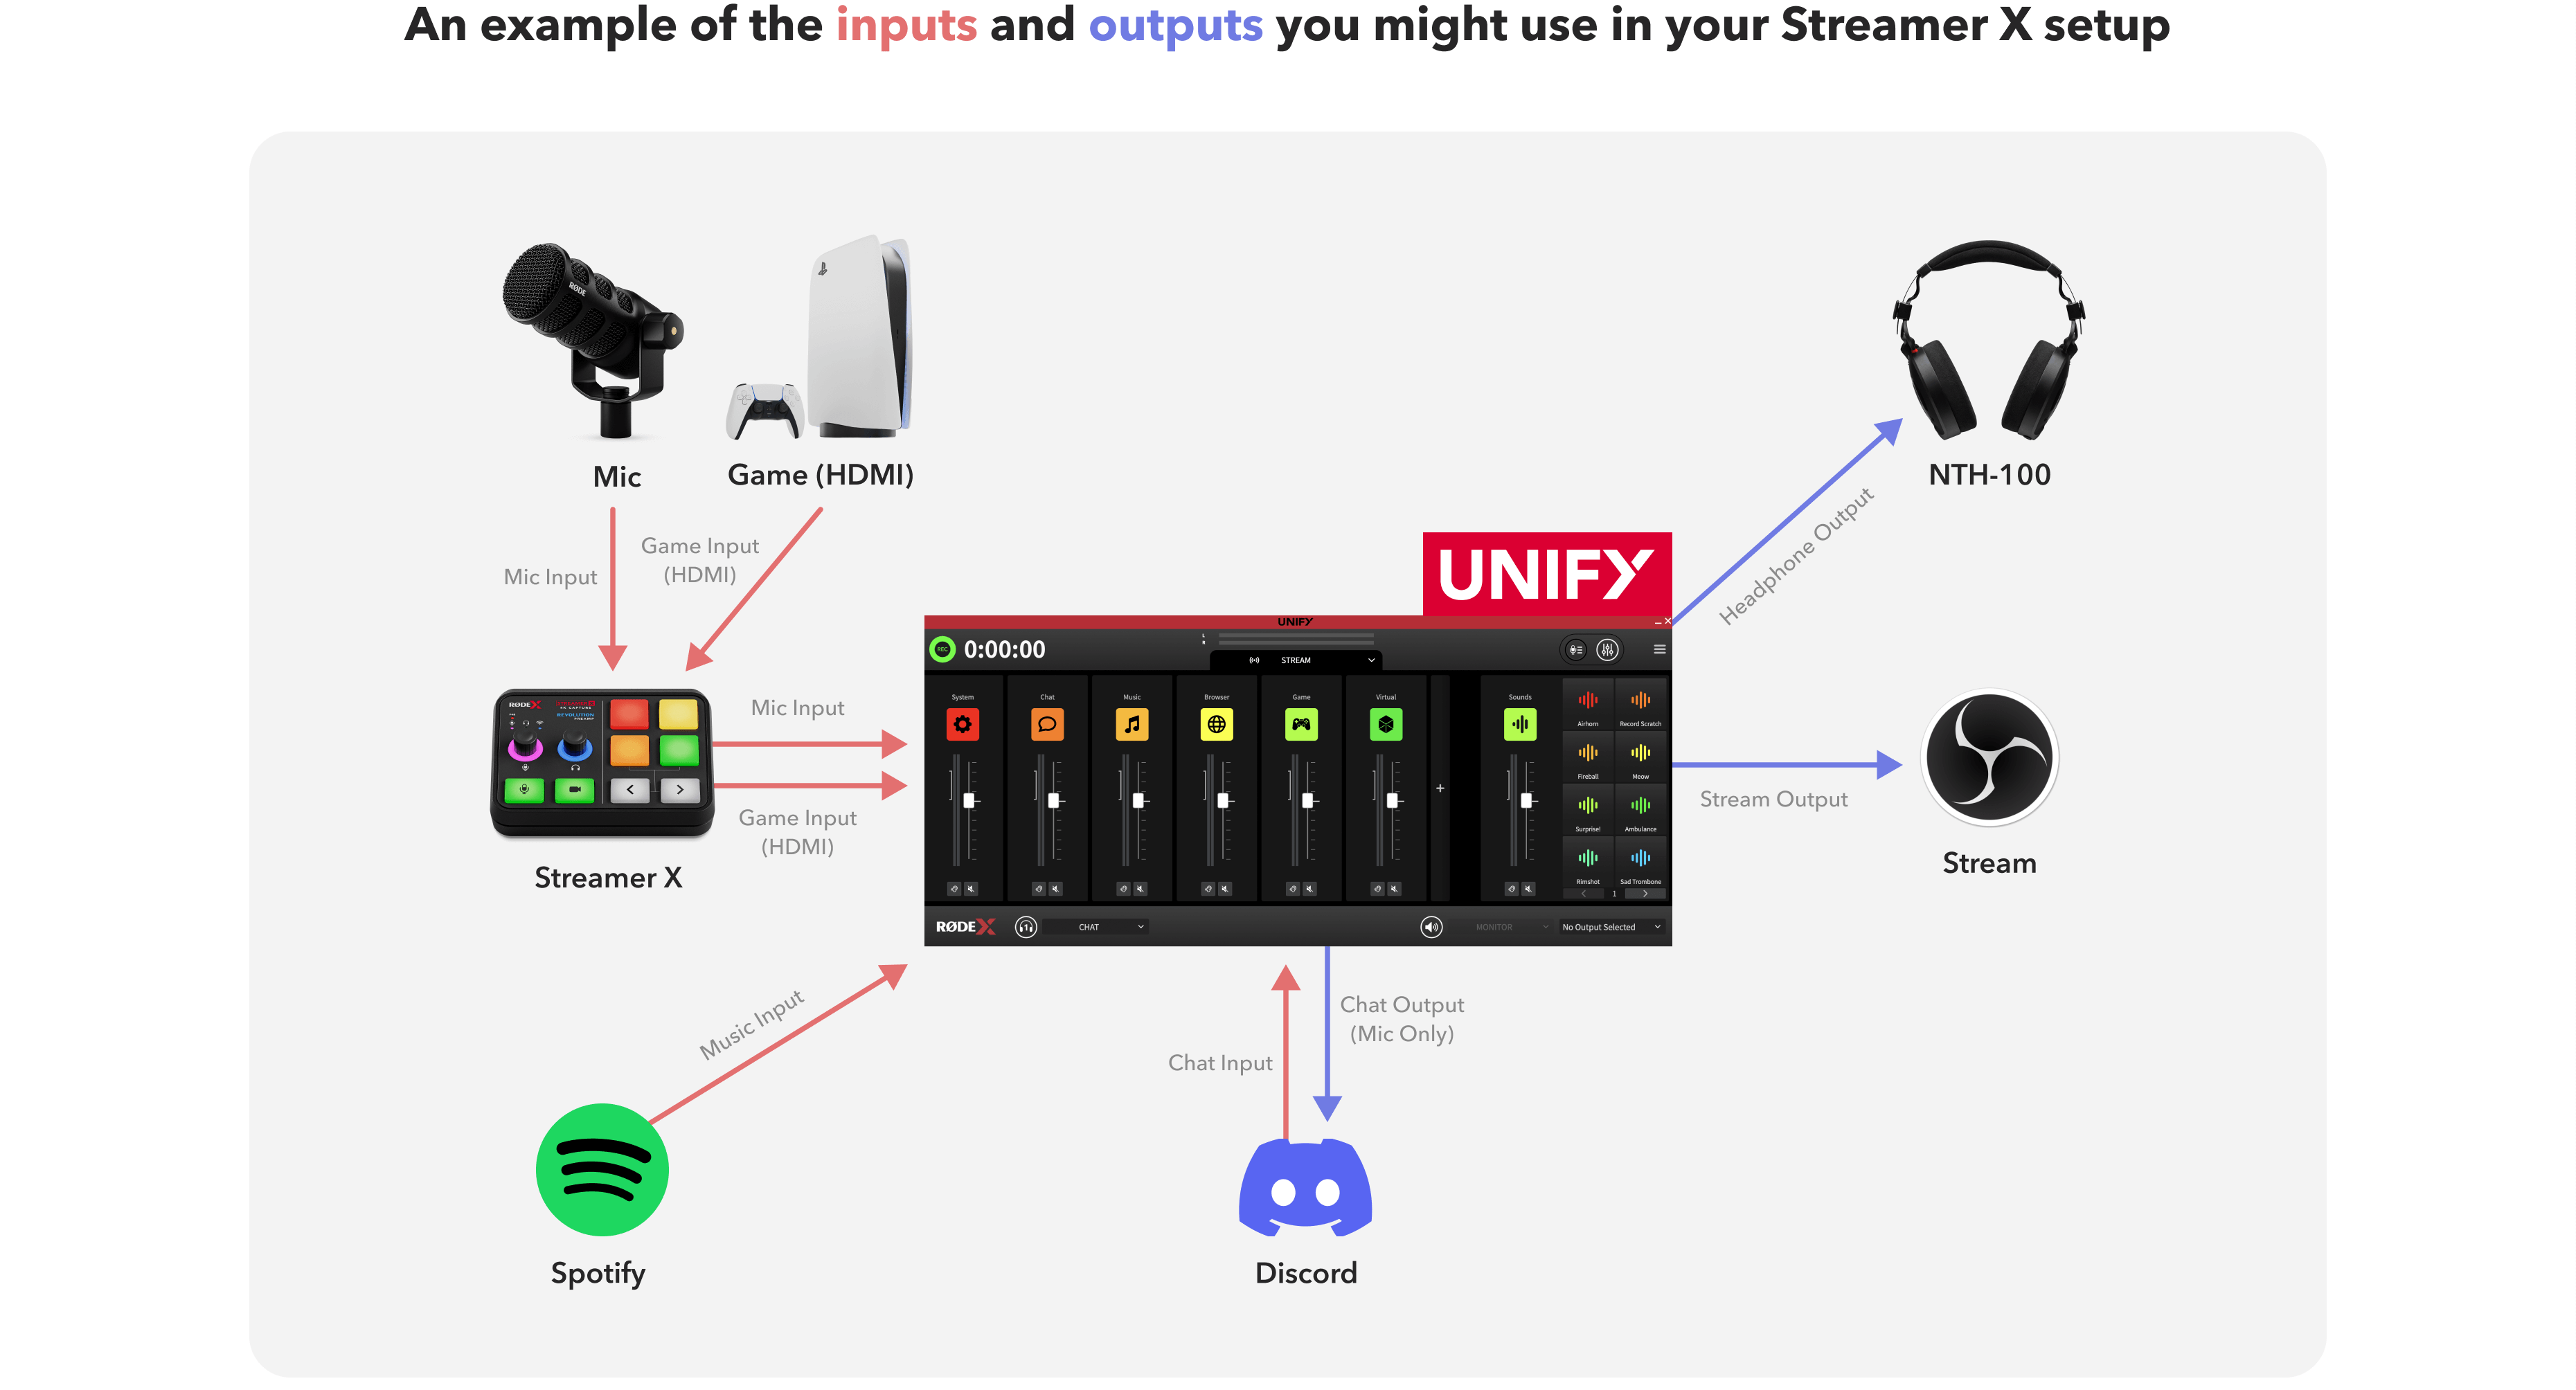 Streamer X setup diagram with UNIFY